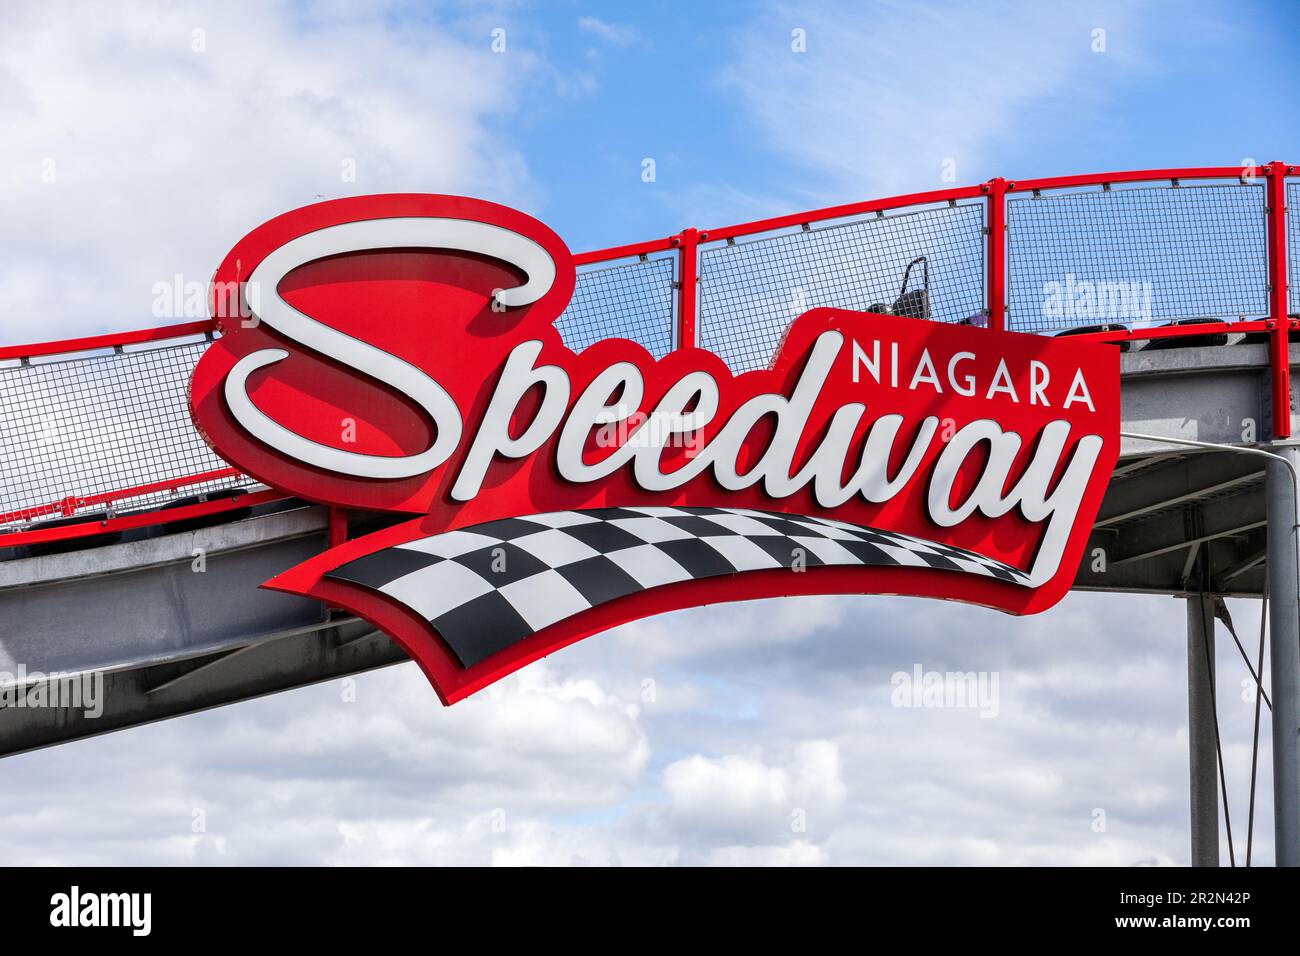 Niagara Speedway Go Kart Race Track Tourist Attraction Niagara Falls, Ontario Canada Stock Photo